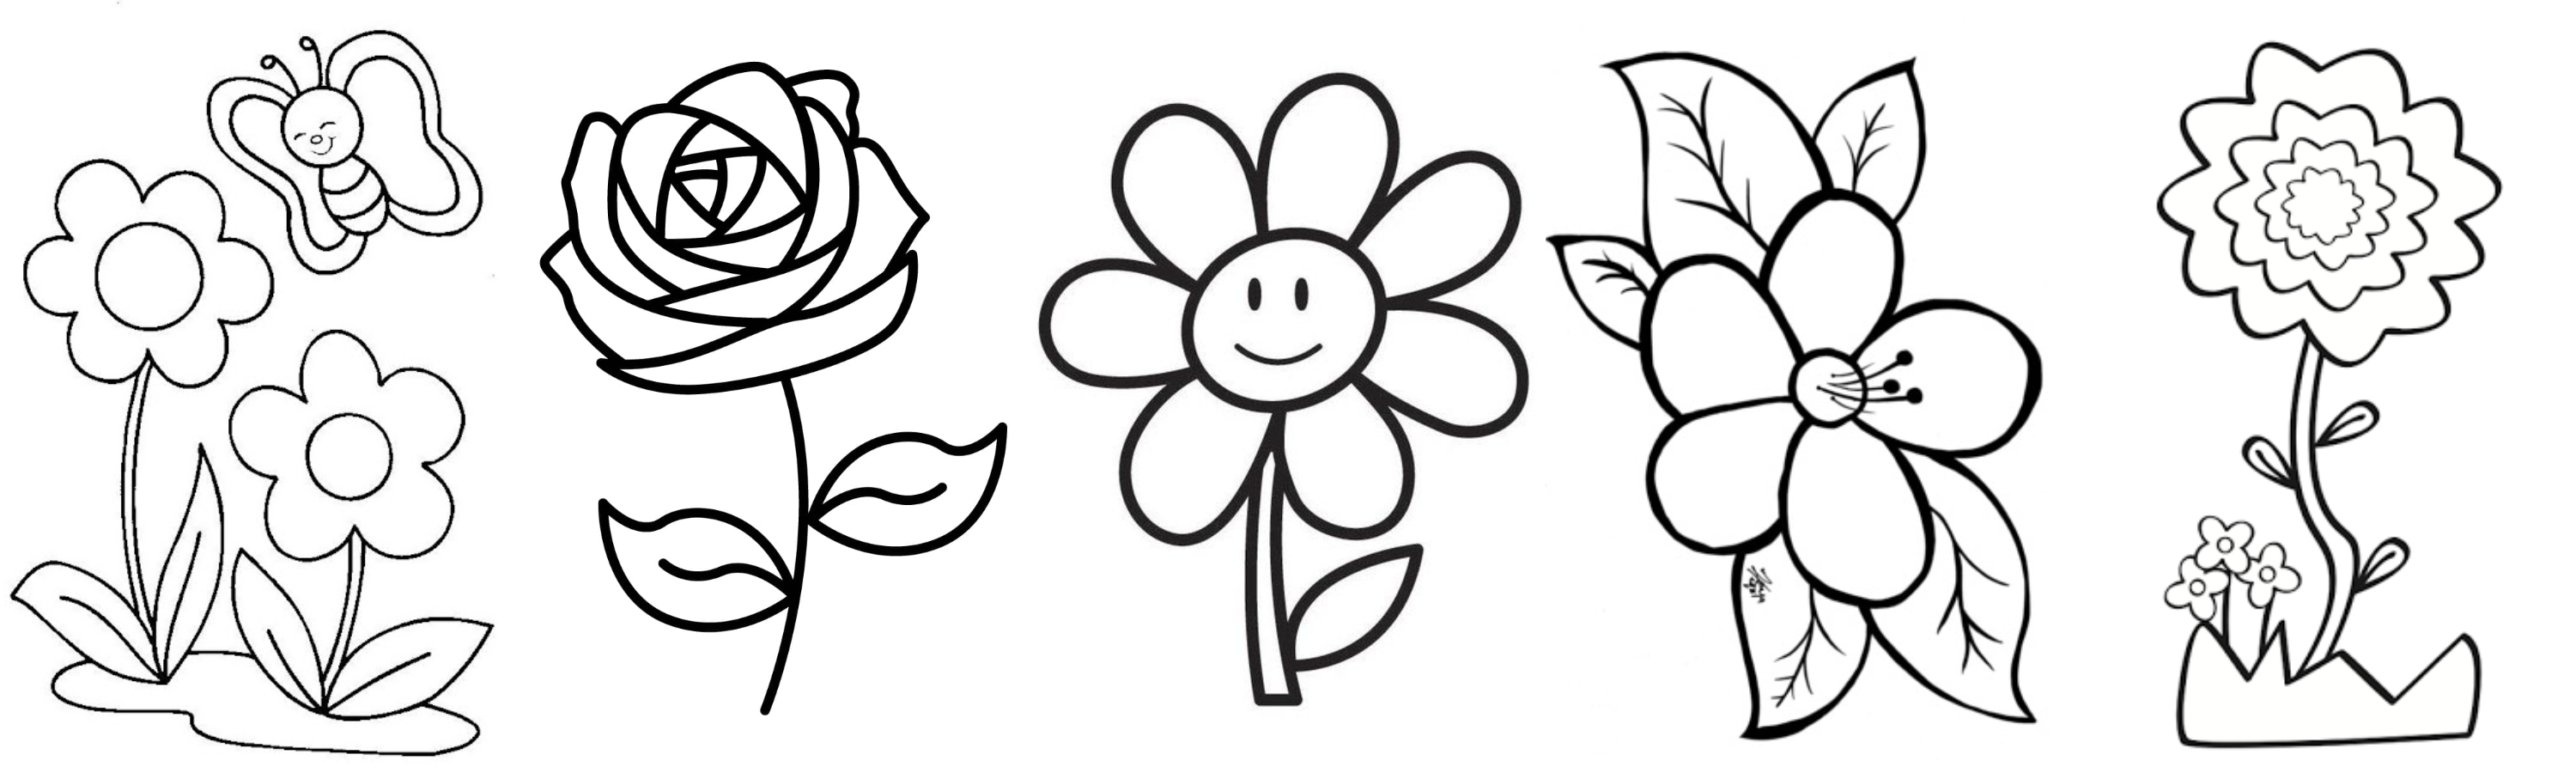 10 ideas de dibujos fáciles para hacer de flores